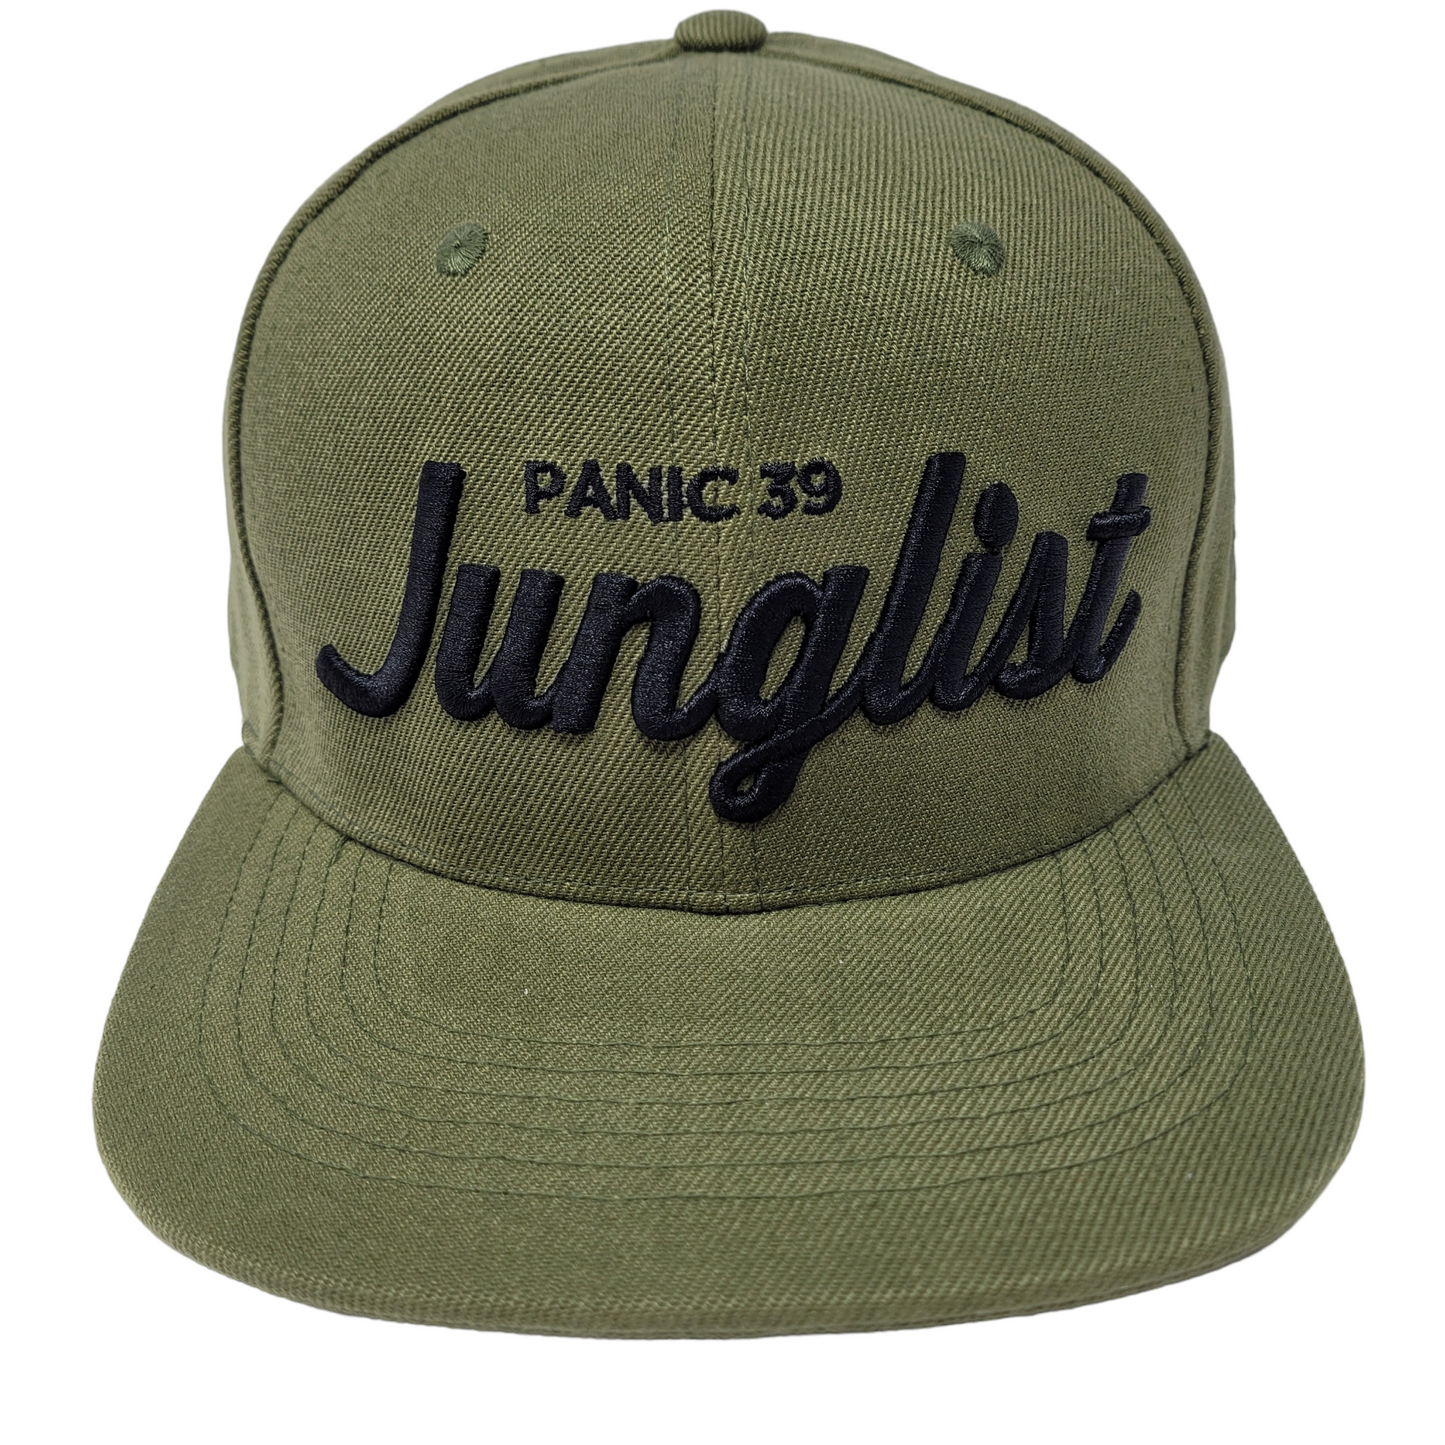 THE OLIVE GREEN PANIC 39 JUNGLIST SNAPBACK BASEBALL HAT